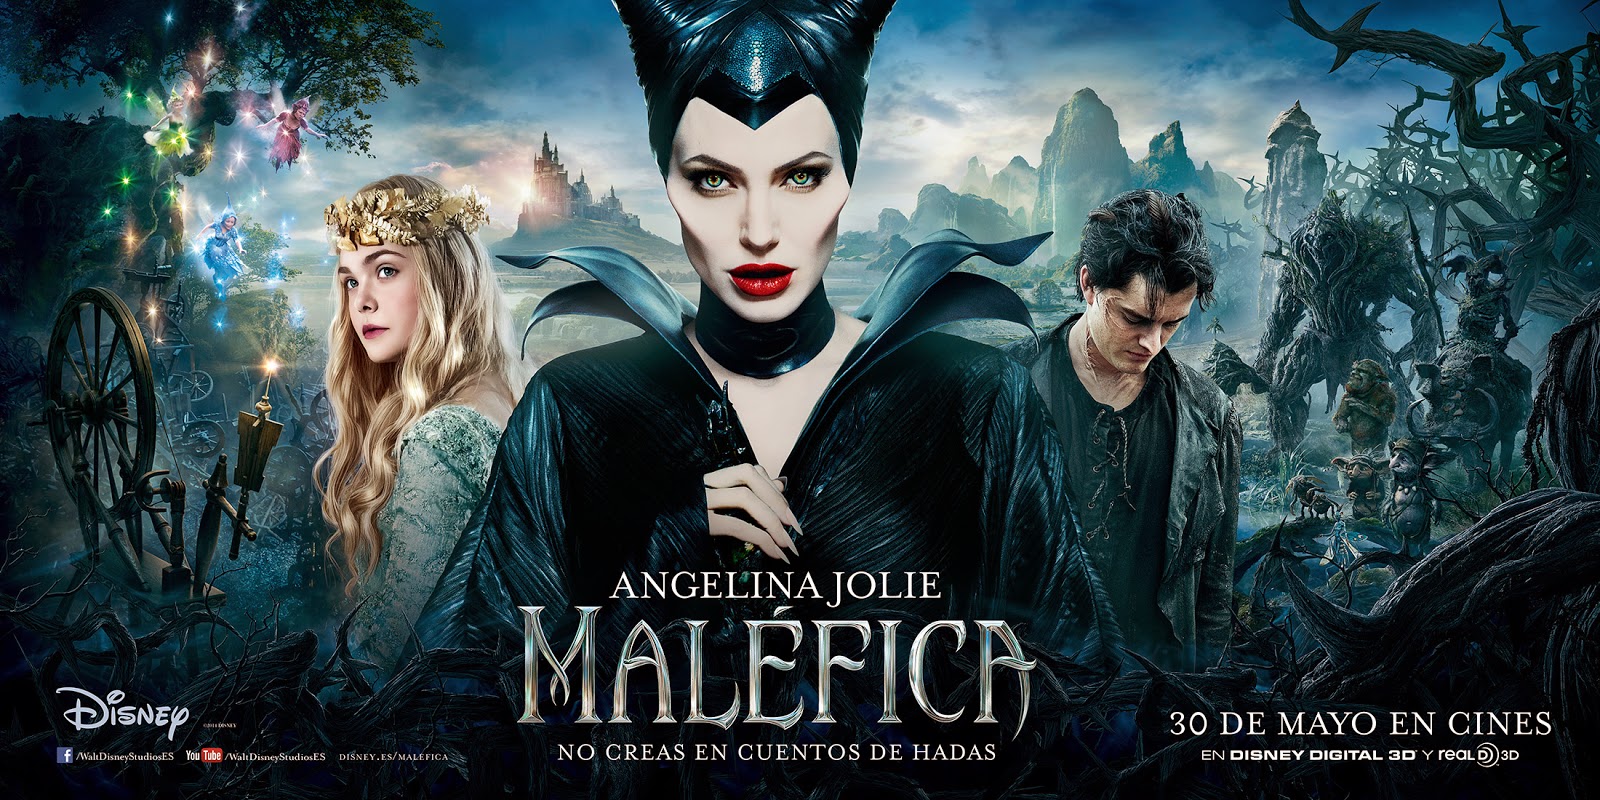 Maleficent กำเนิดนางฟ้าปีศาจ ดูภาคไทย ธรรมดา